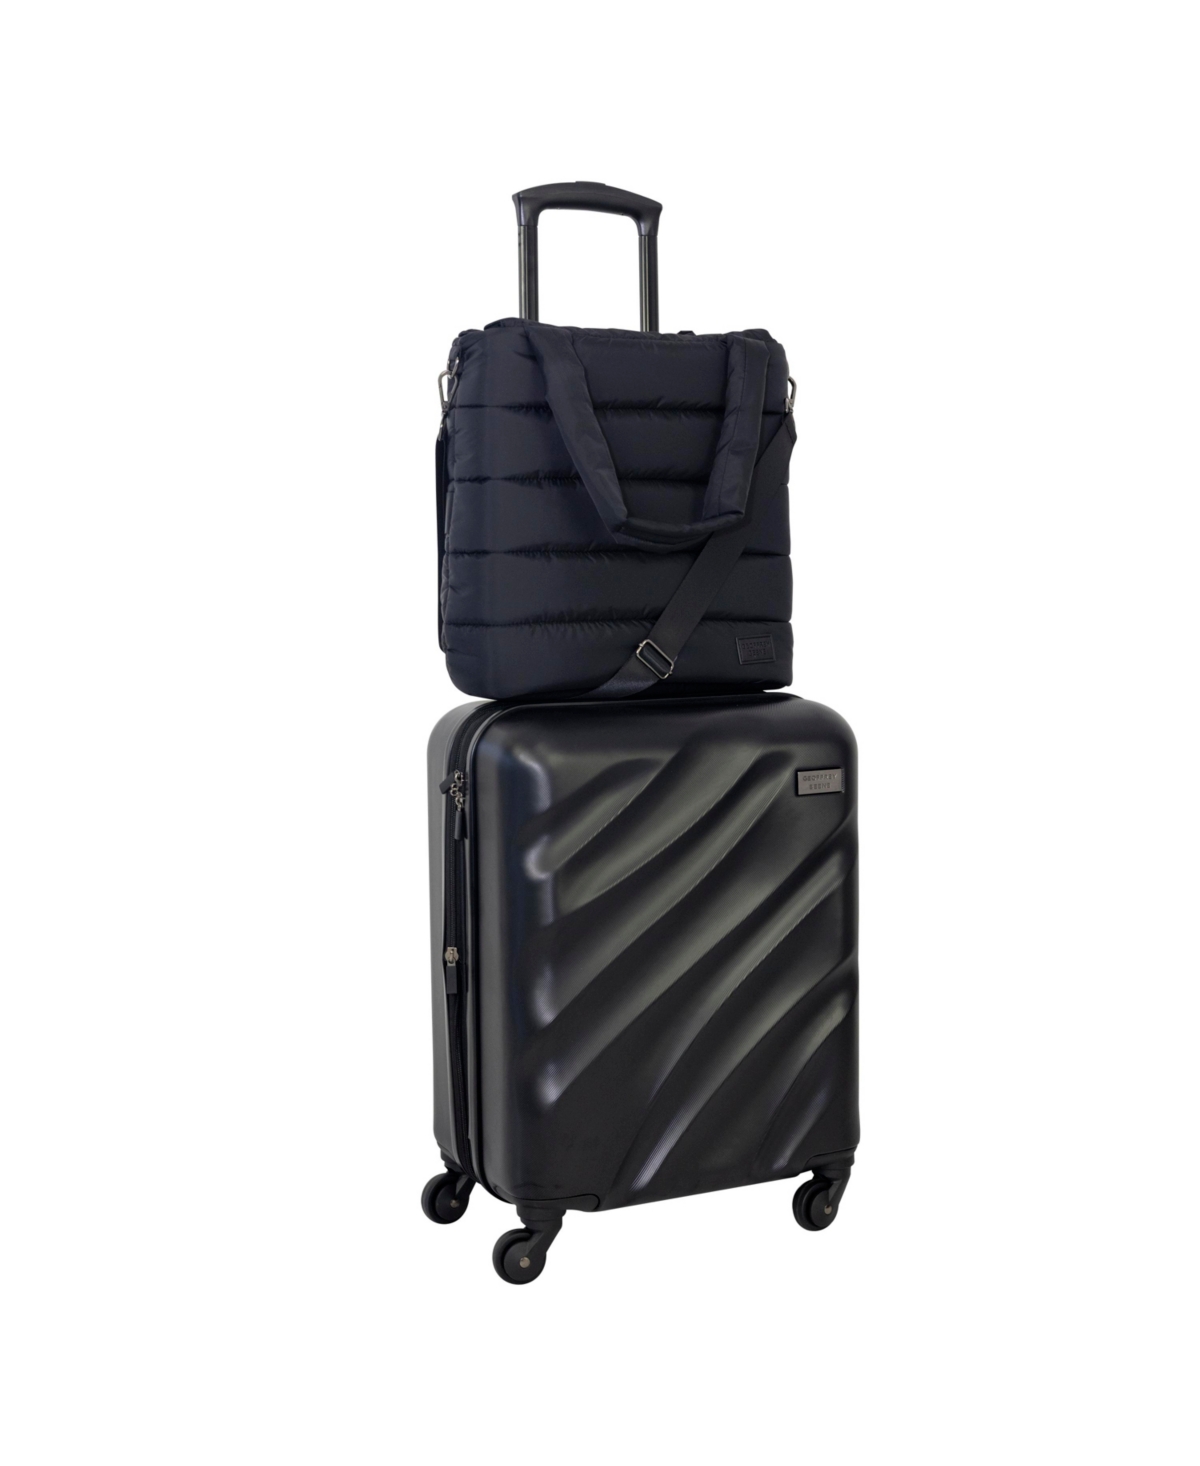 Geoffrey Beene Puffer Hardside Luggage Set, 2 Piece In Black